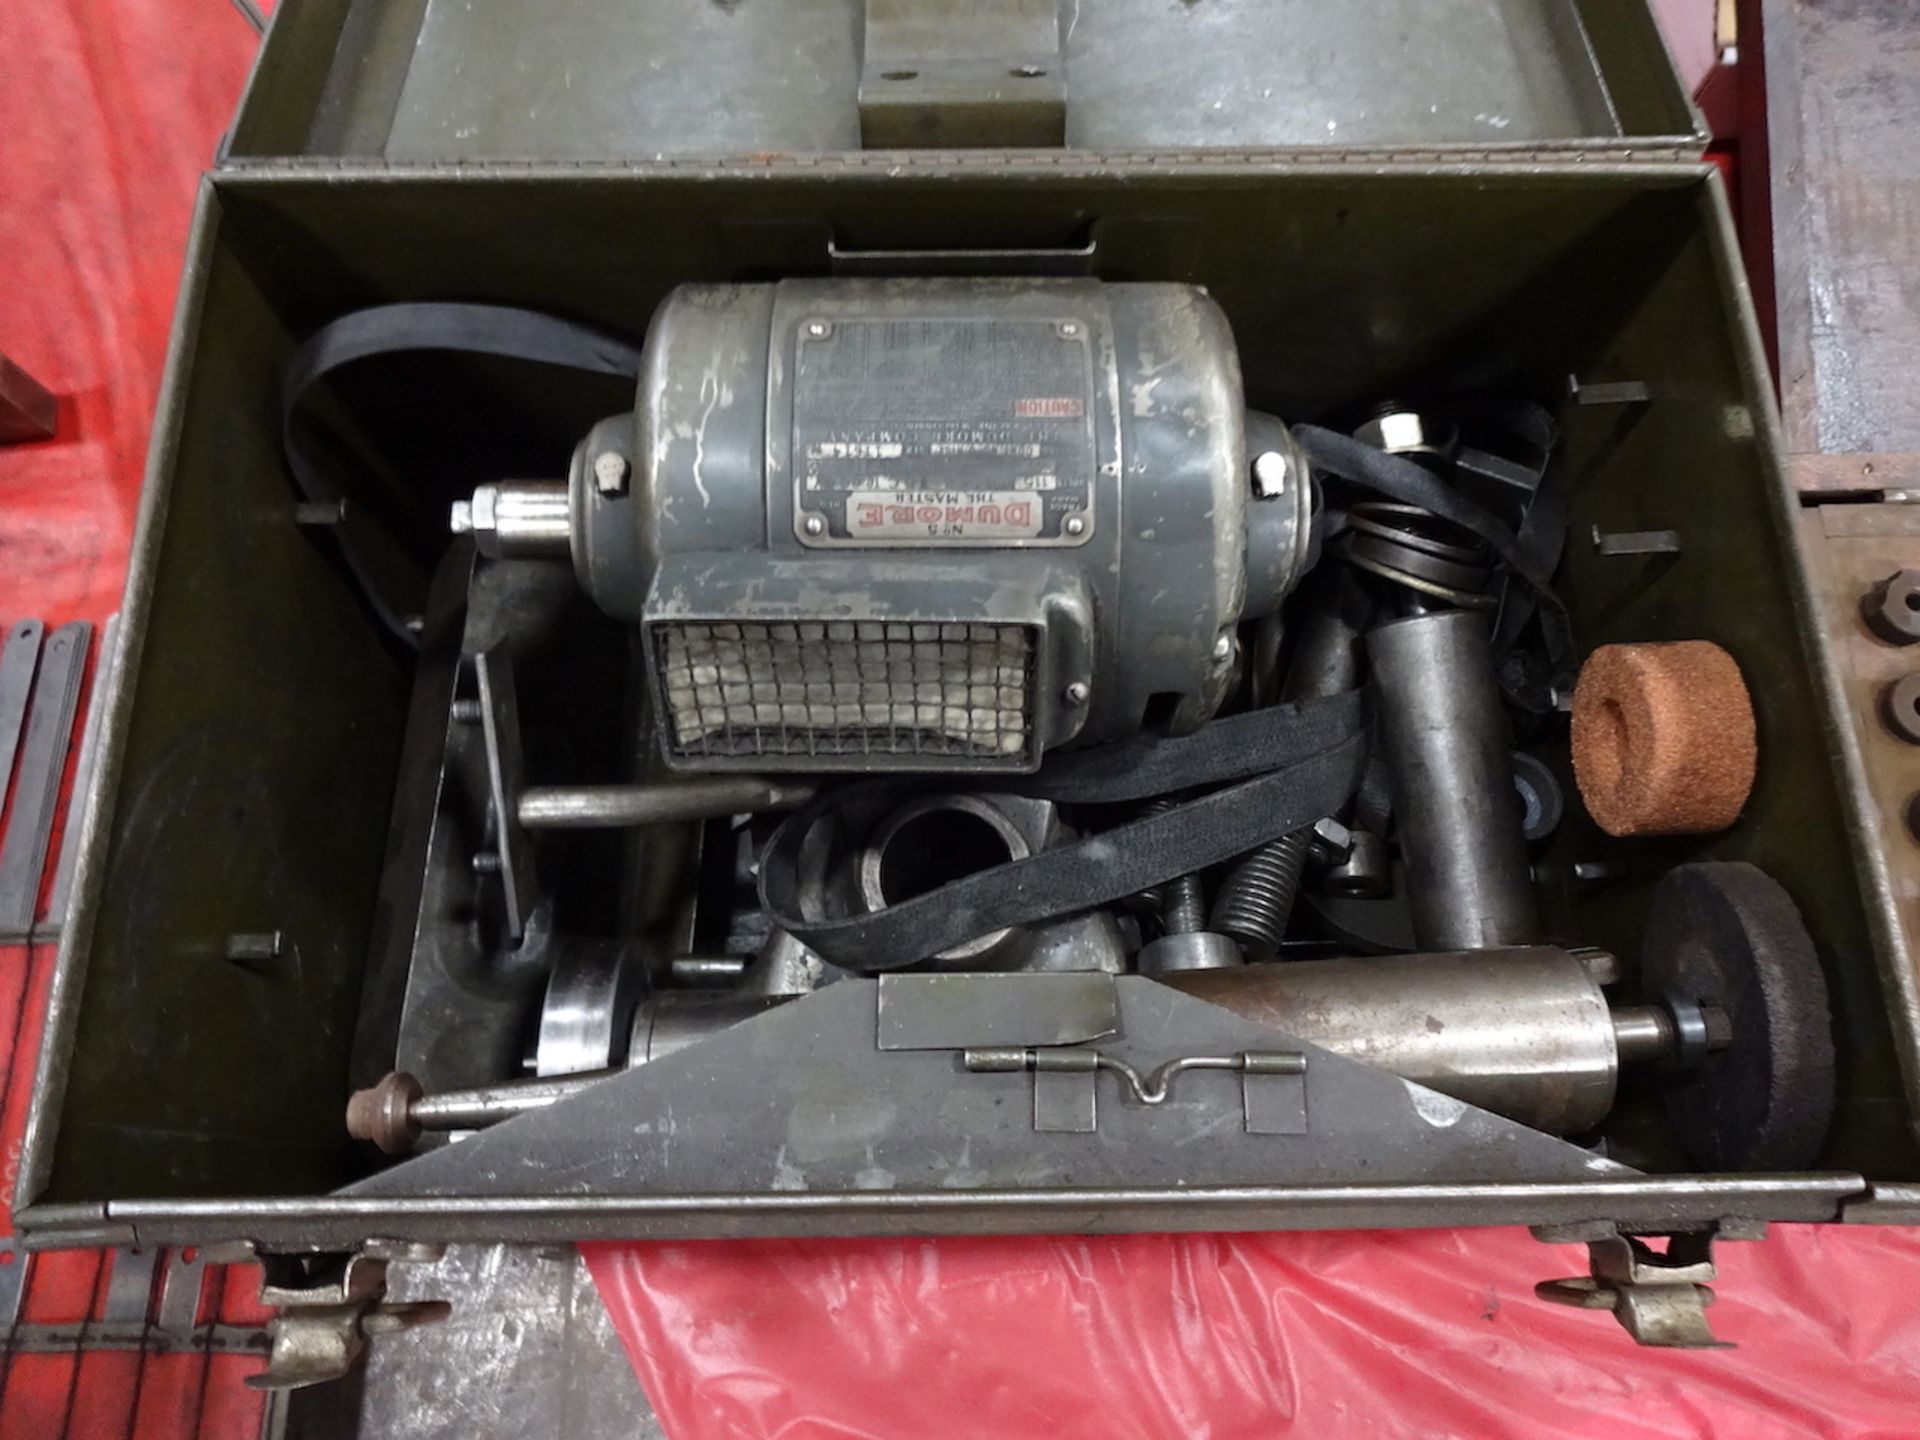 Dumore Model 8119 Tool Post Grinder